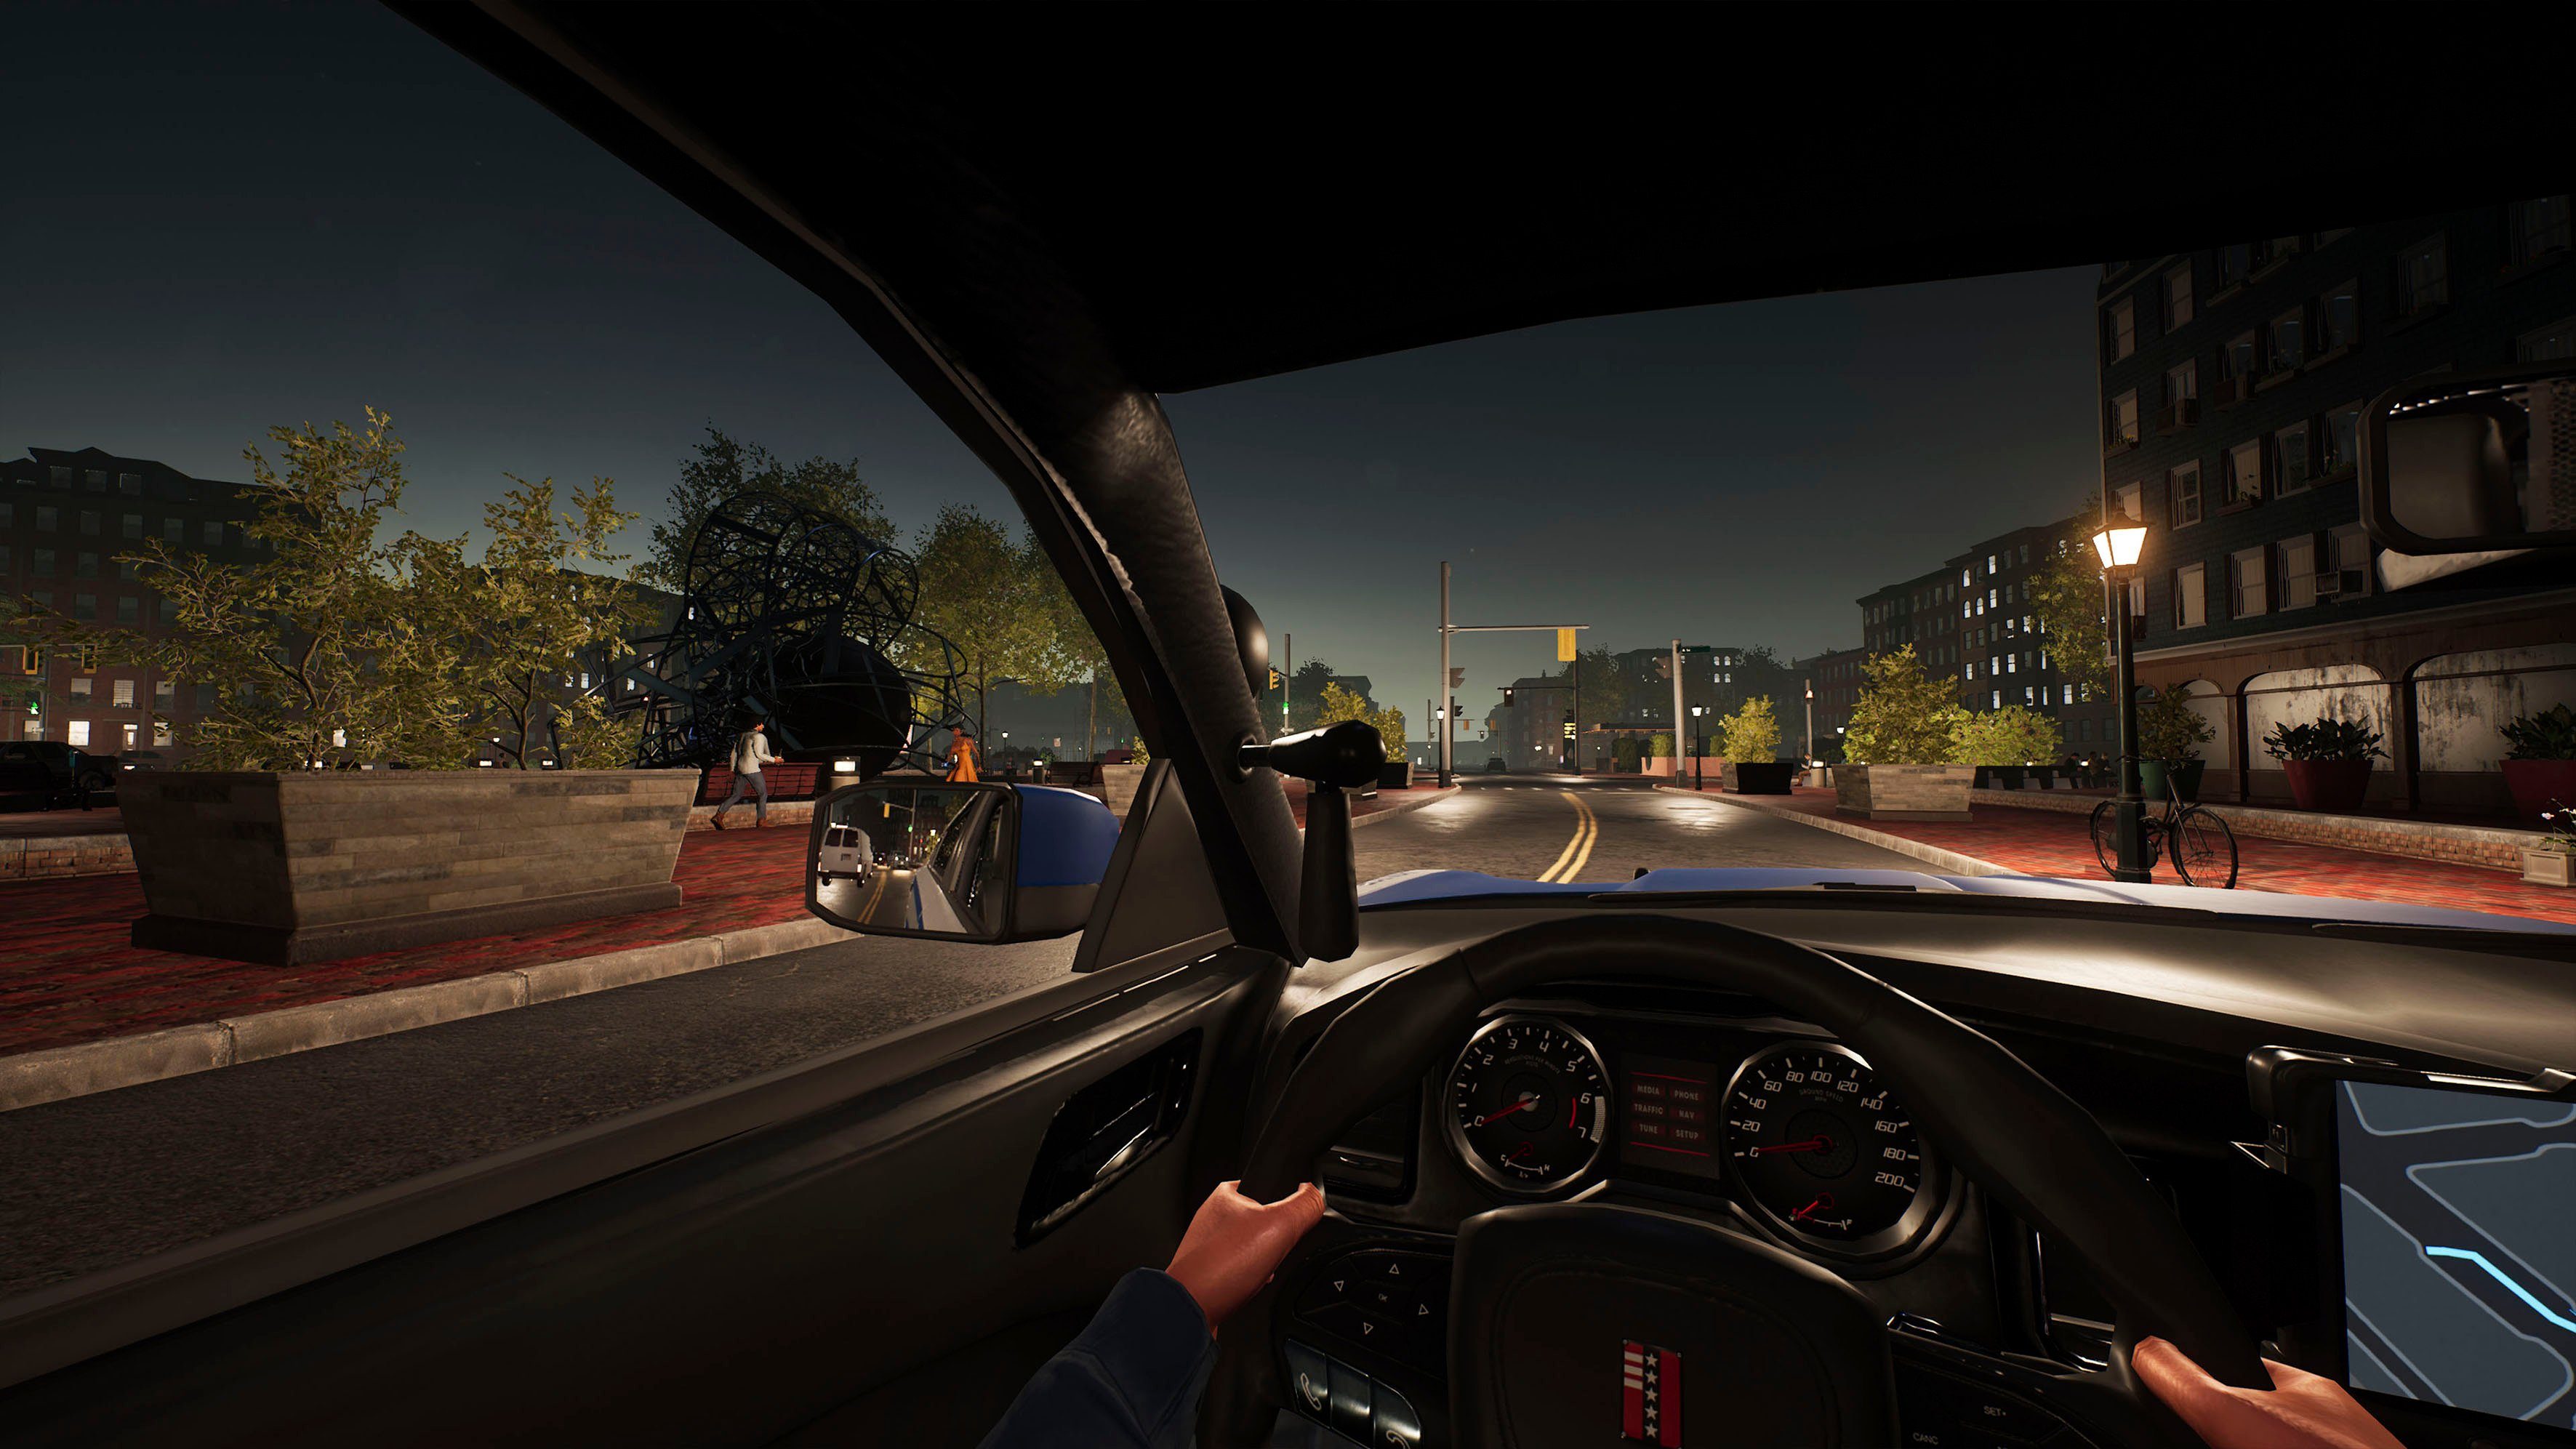 Astragon Police Simulator: Patrol PlayStation Officers 5